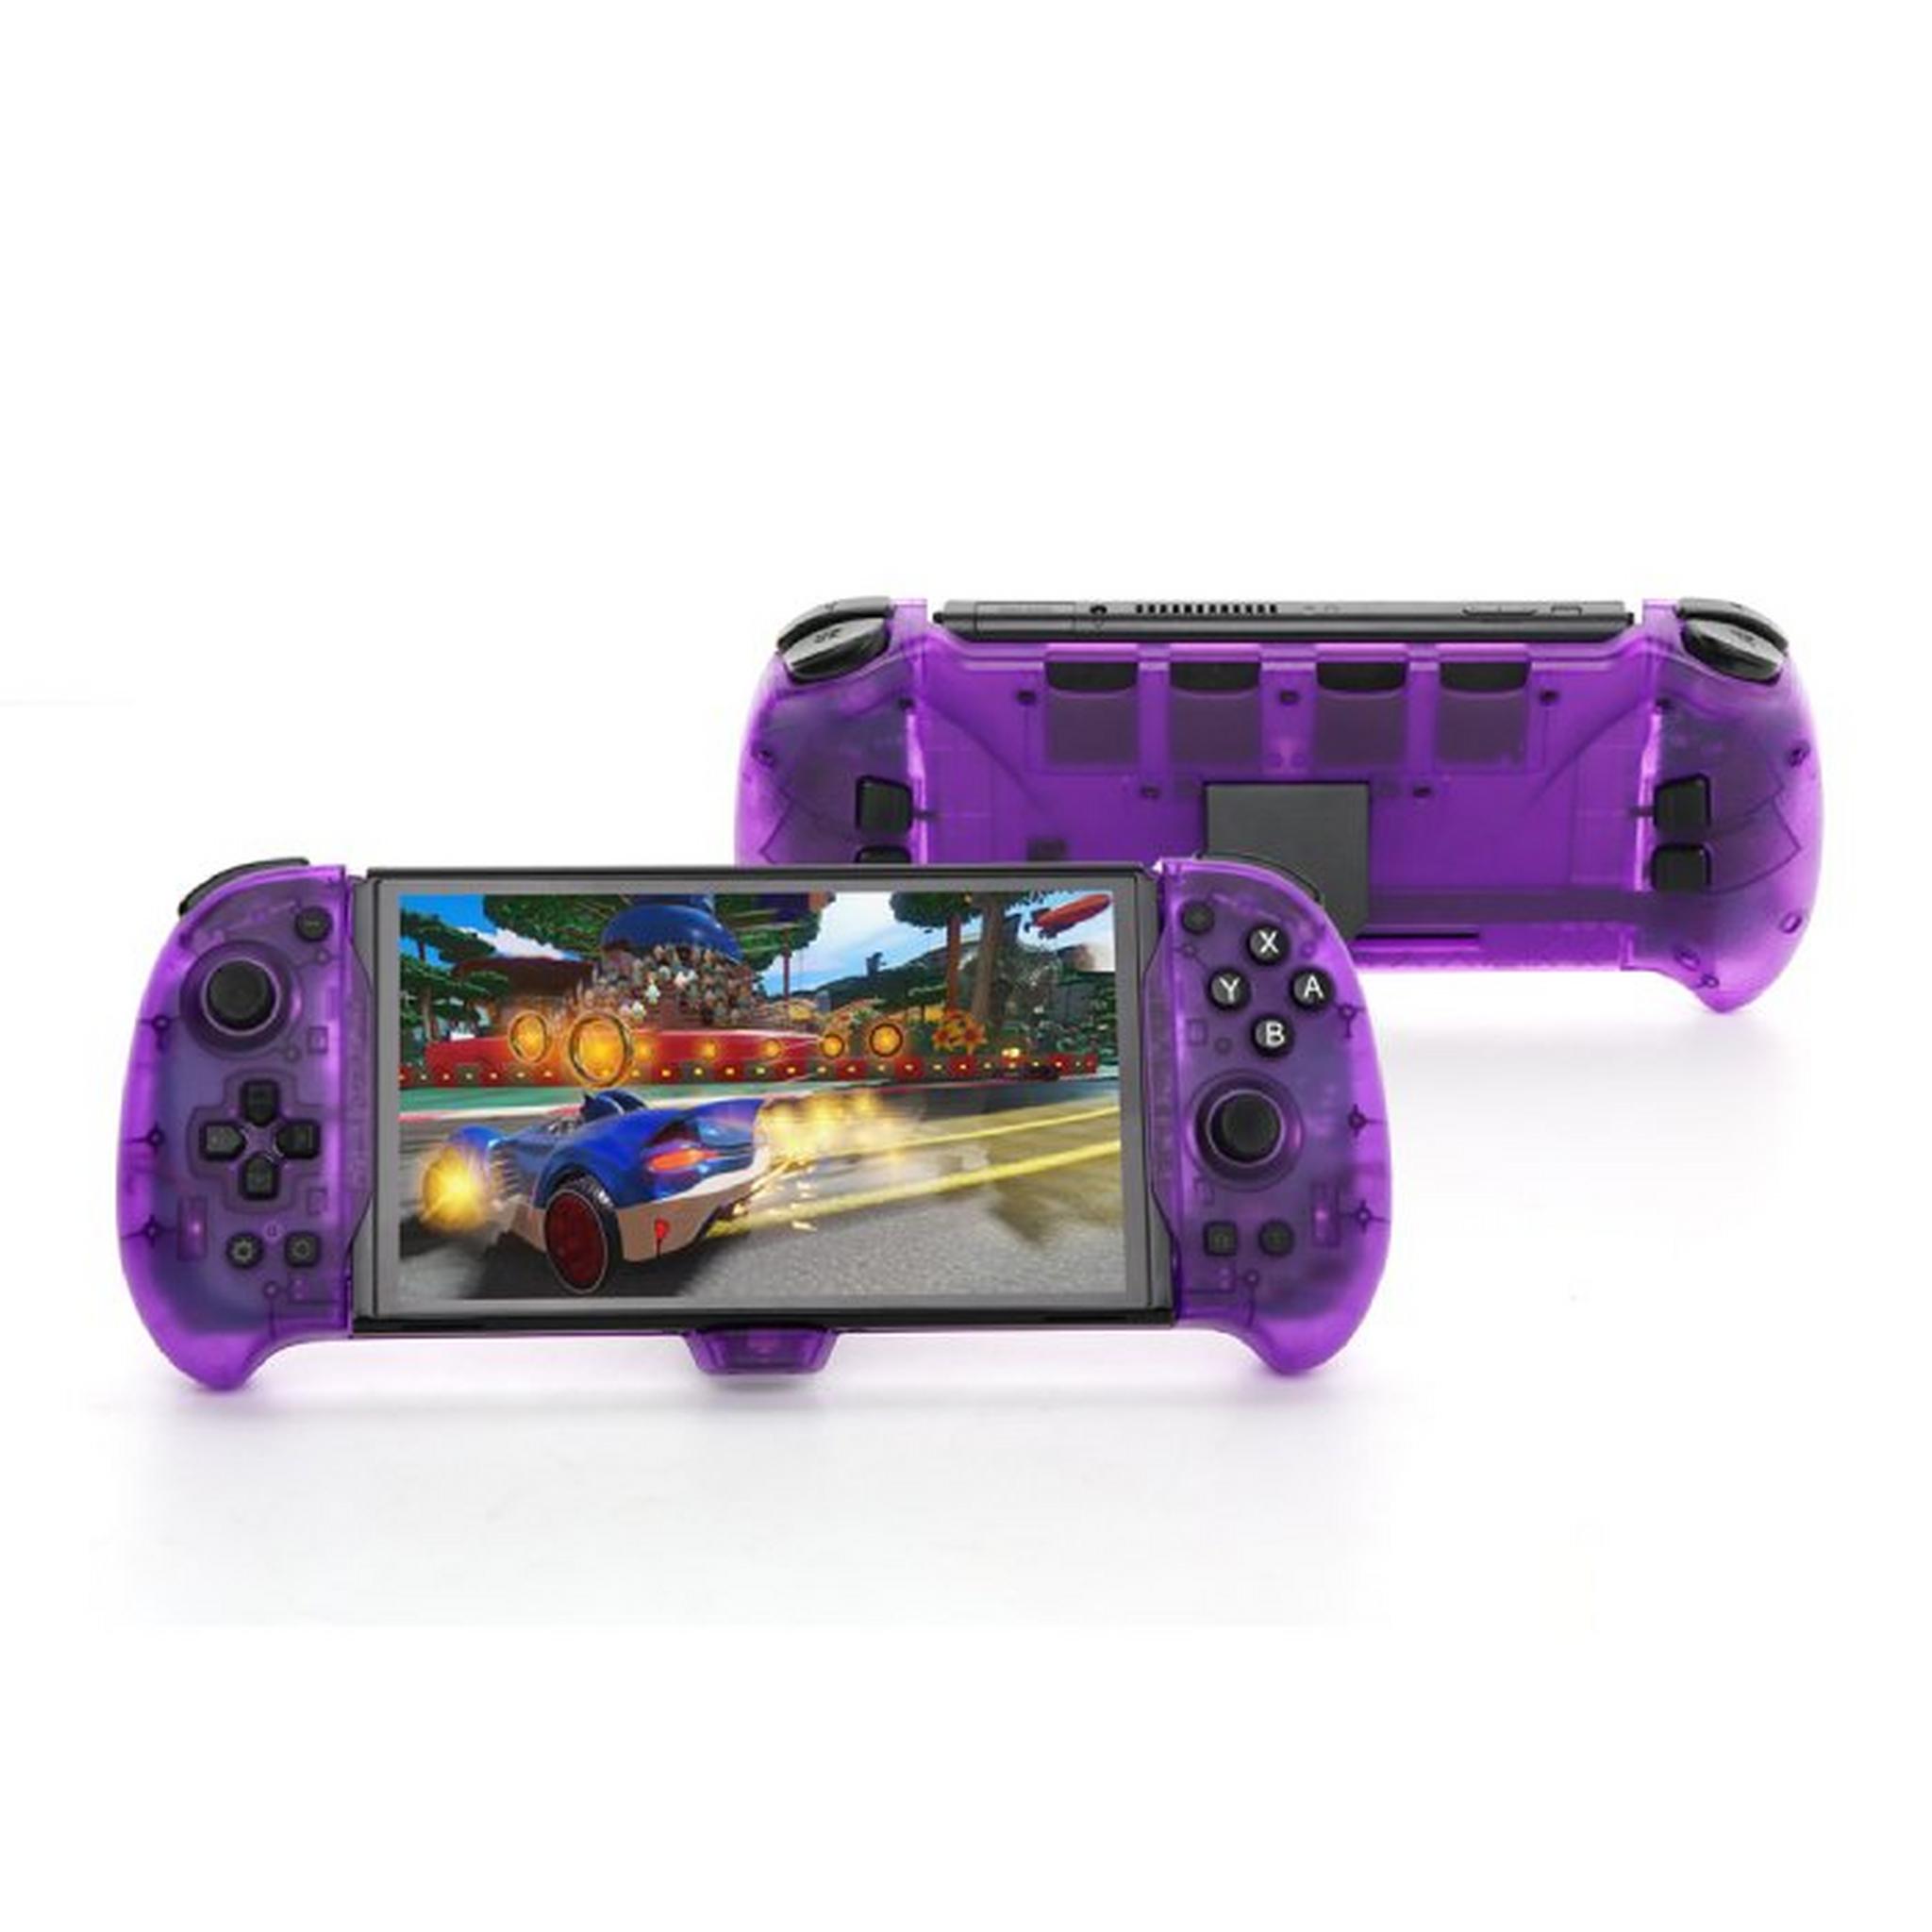 Dobe Eggshell Controller for Nintendo Switch OLED, TNS-1188 – Transparent Purple